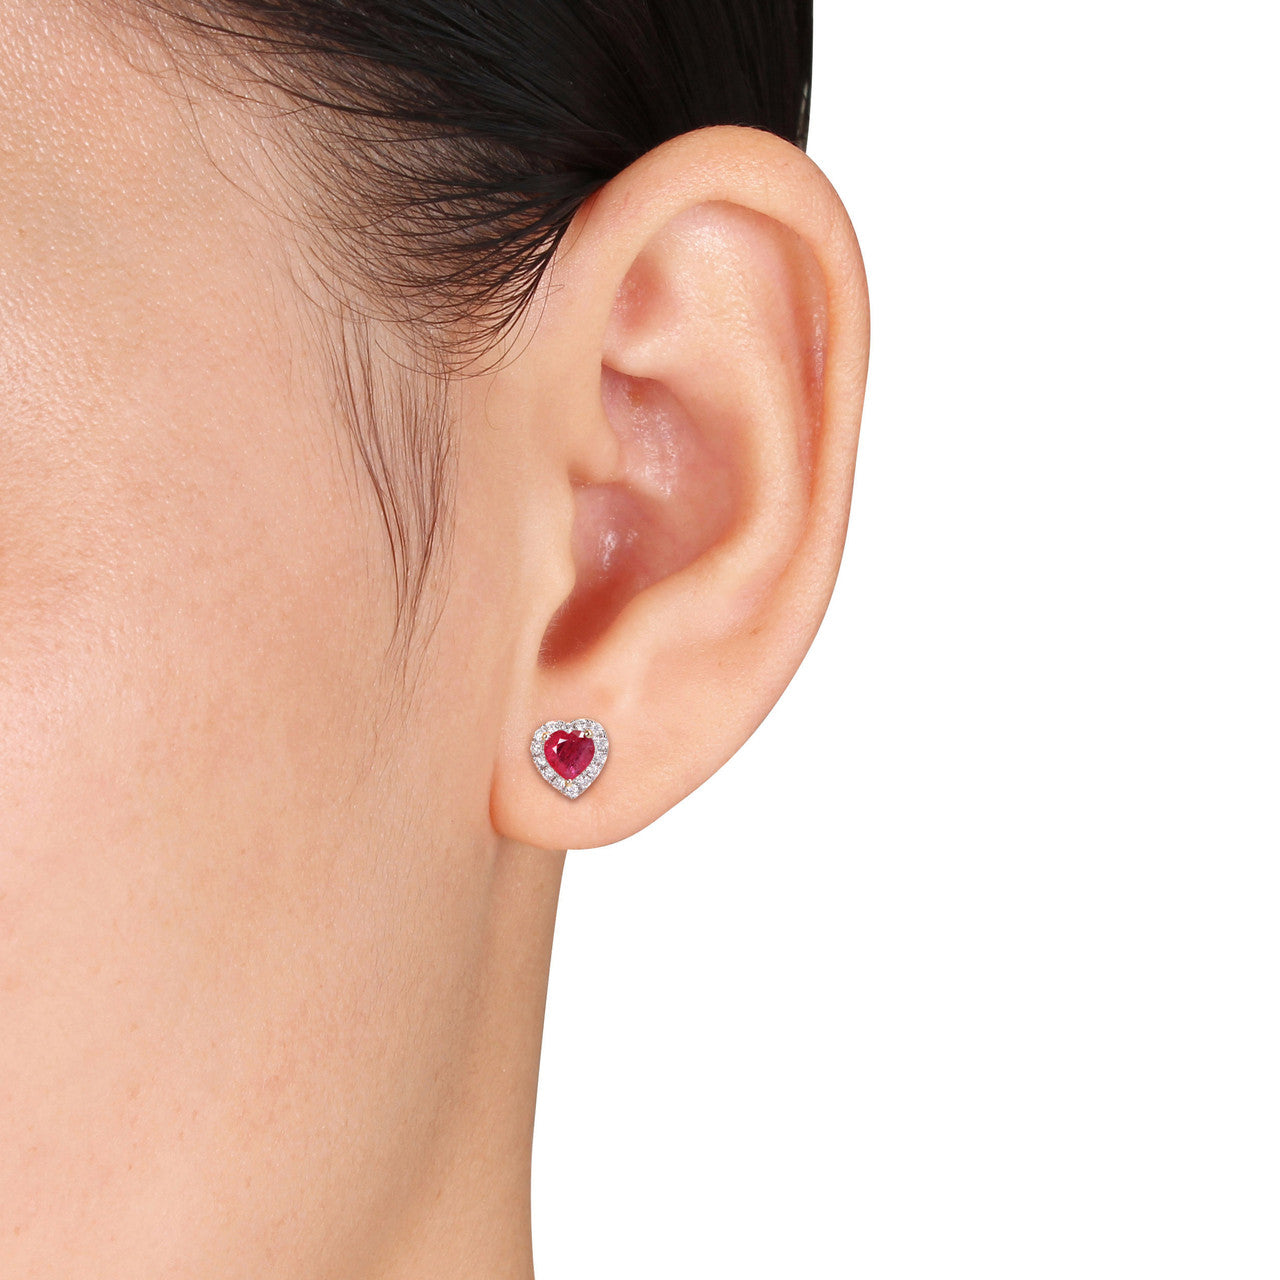 Ice Jewellery 1/3 CT Diamond TW and 1 1/8 CT TGW Ruby Ear Pin Earrings in 14k White Gold - 75000004901 | Ice Jewellery Australia